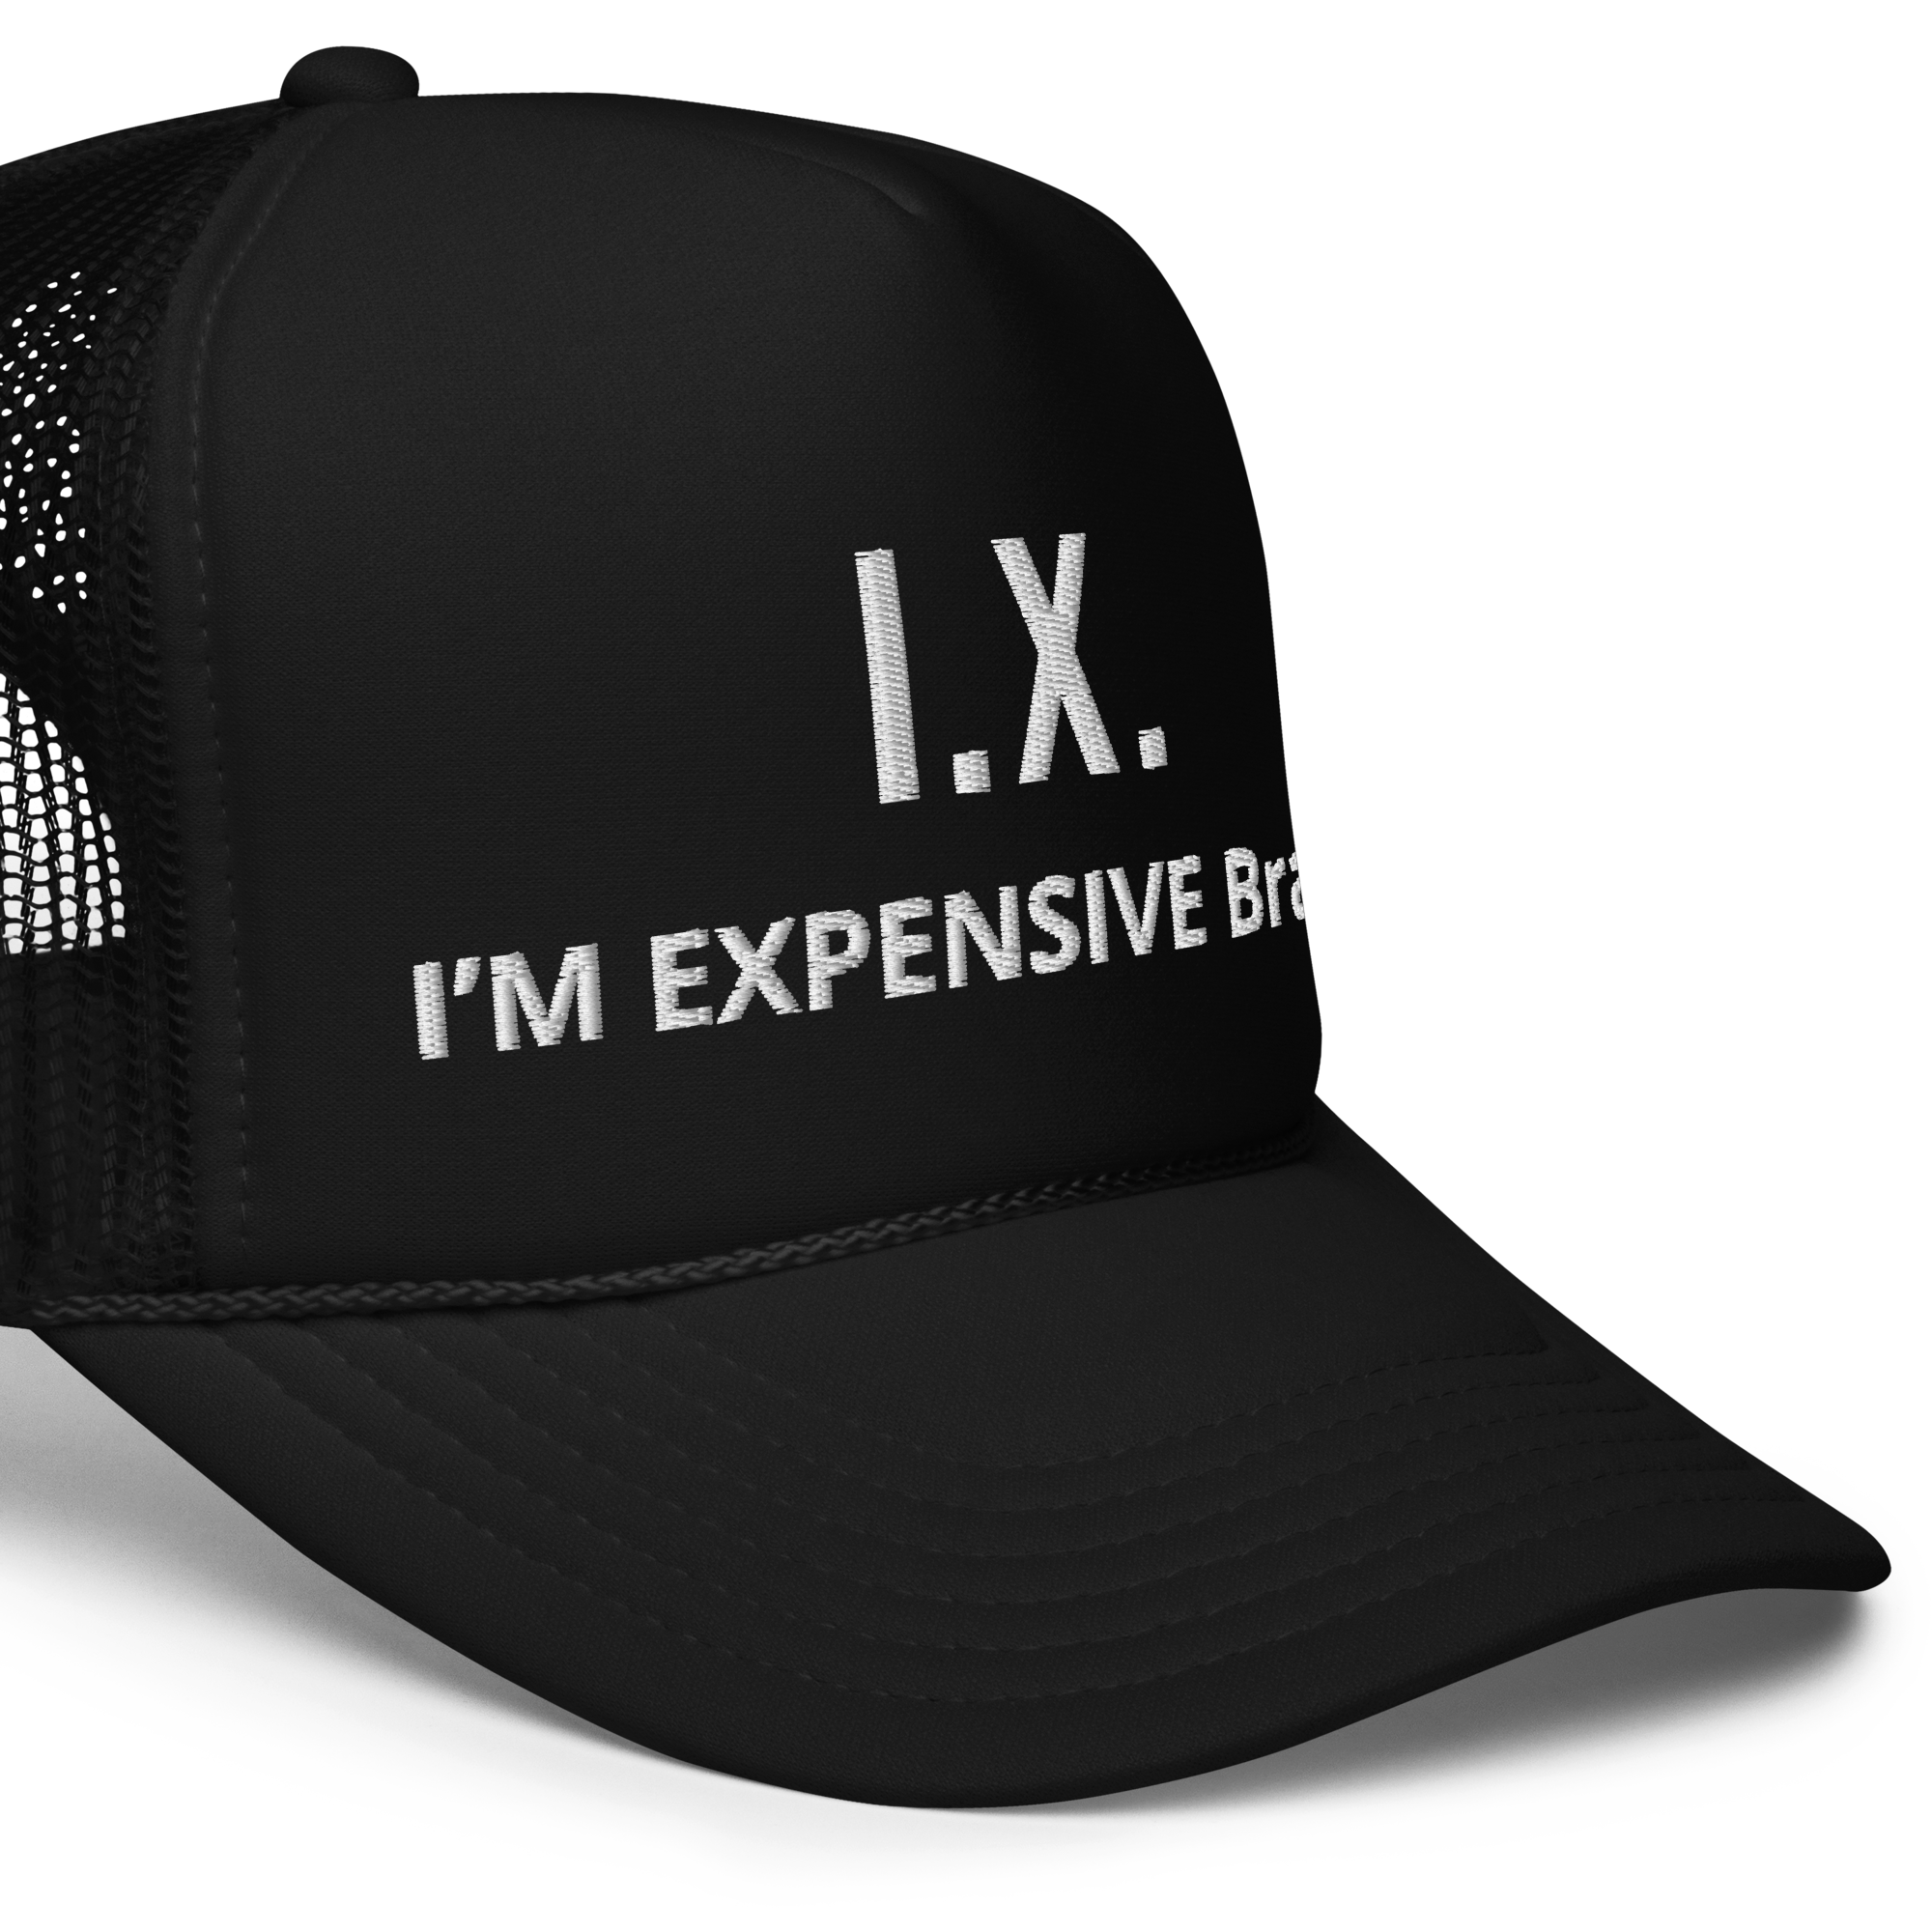 I’m Expensive IX Black Foam Trucker Hat